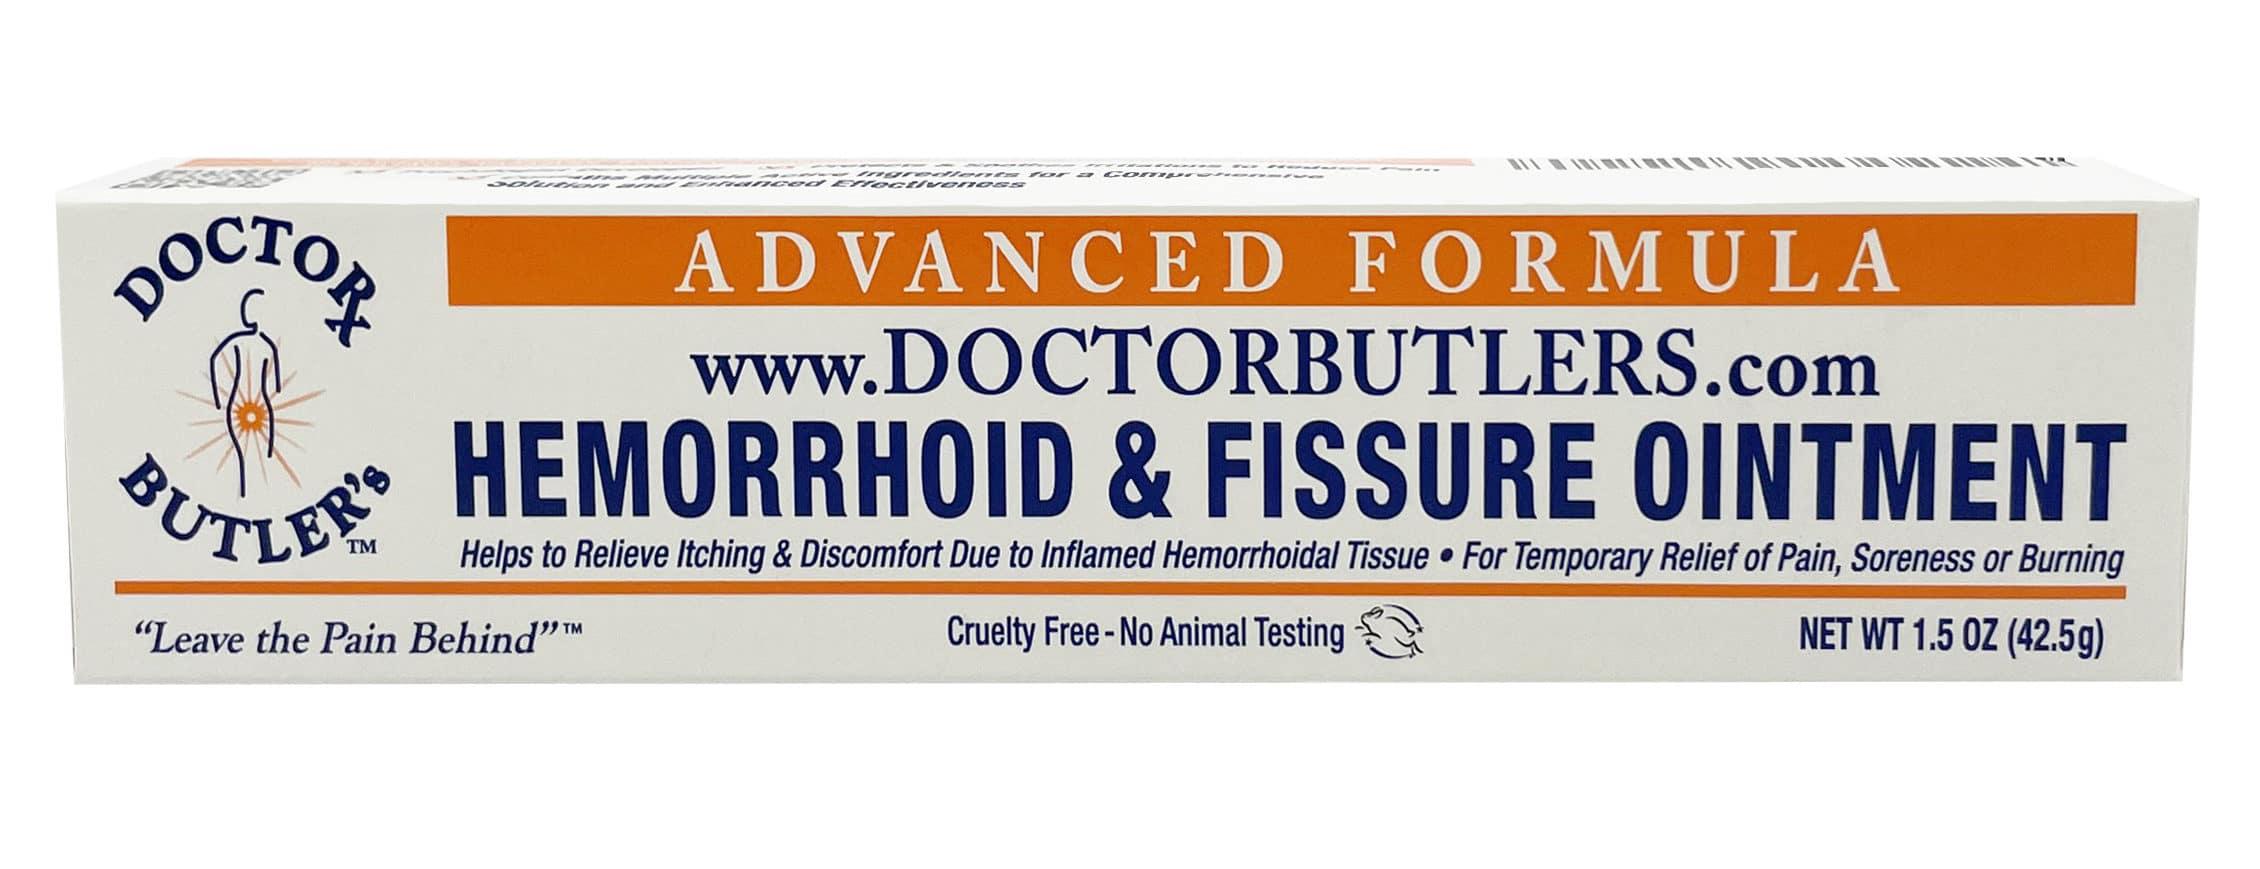 Advanced Hemorrhoid Fissure Ointment